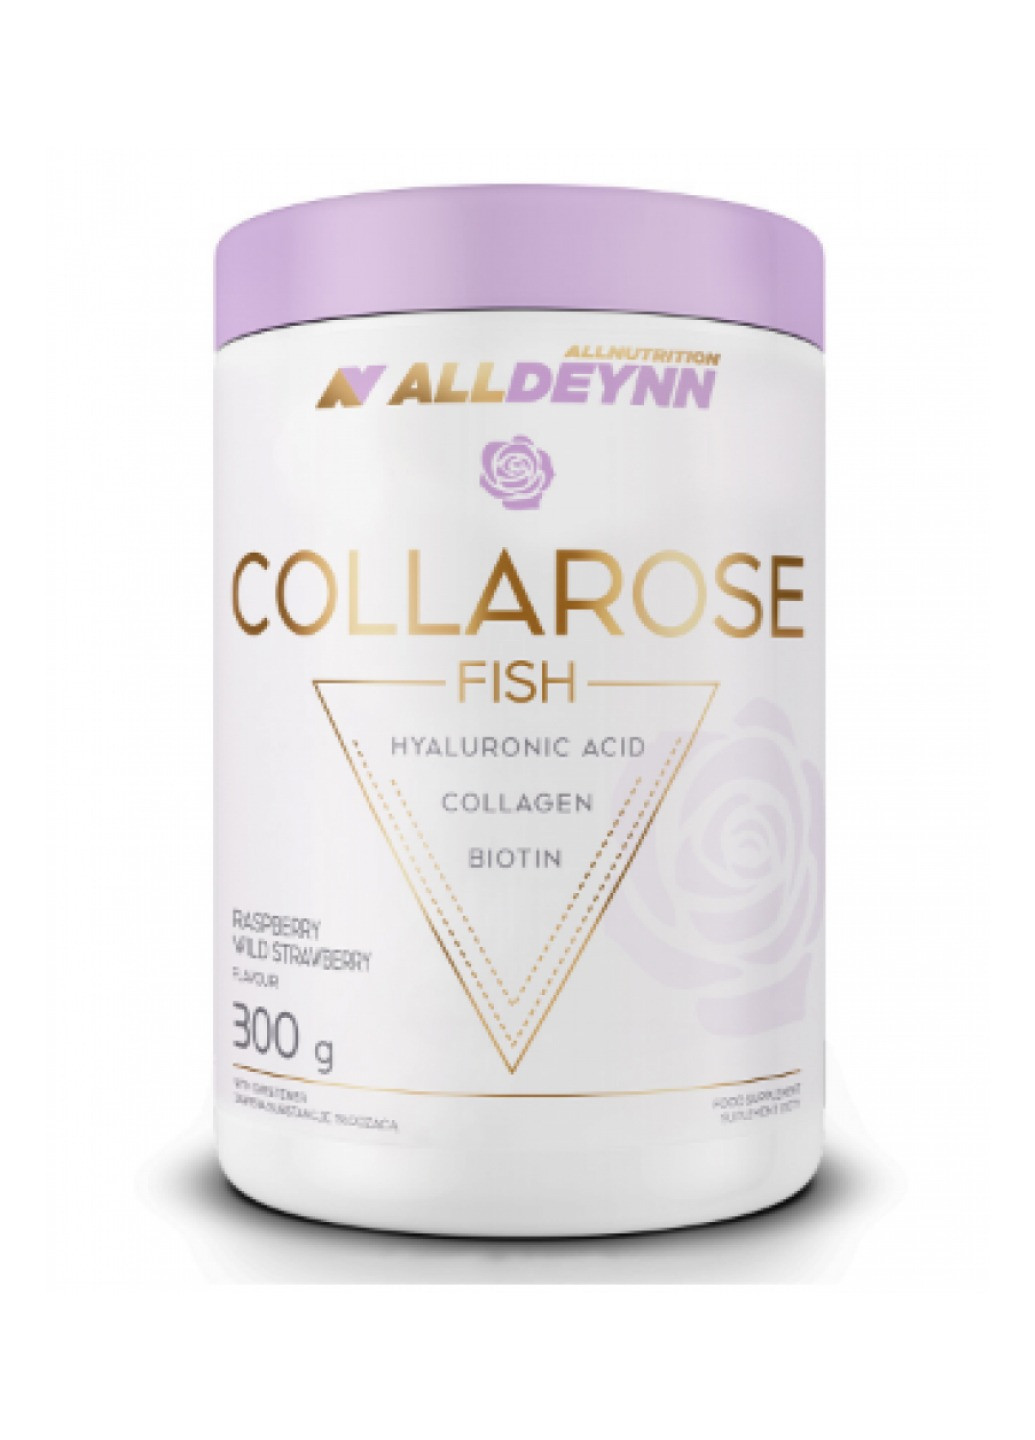 Добавка для женщин для кожи и фигуры AllDeynn Collarose Fish - 300g Raspberry Wild Strawberry Allnutrition (258191598)